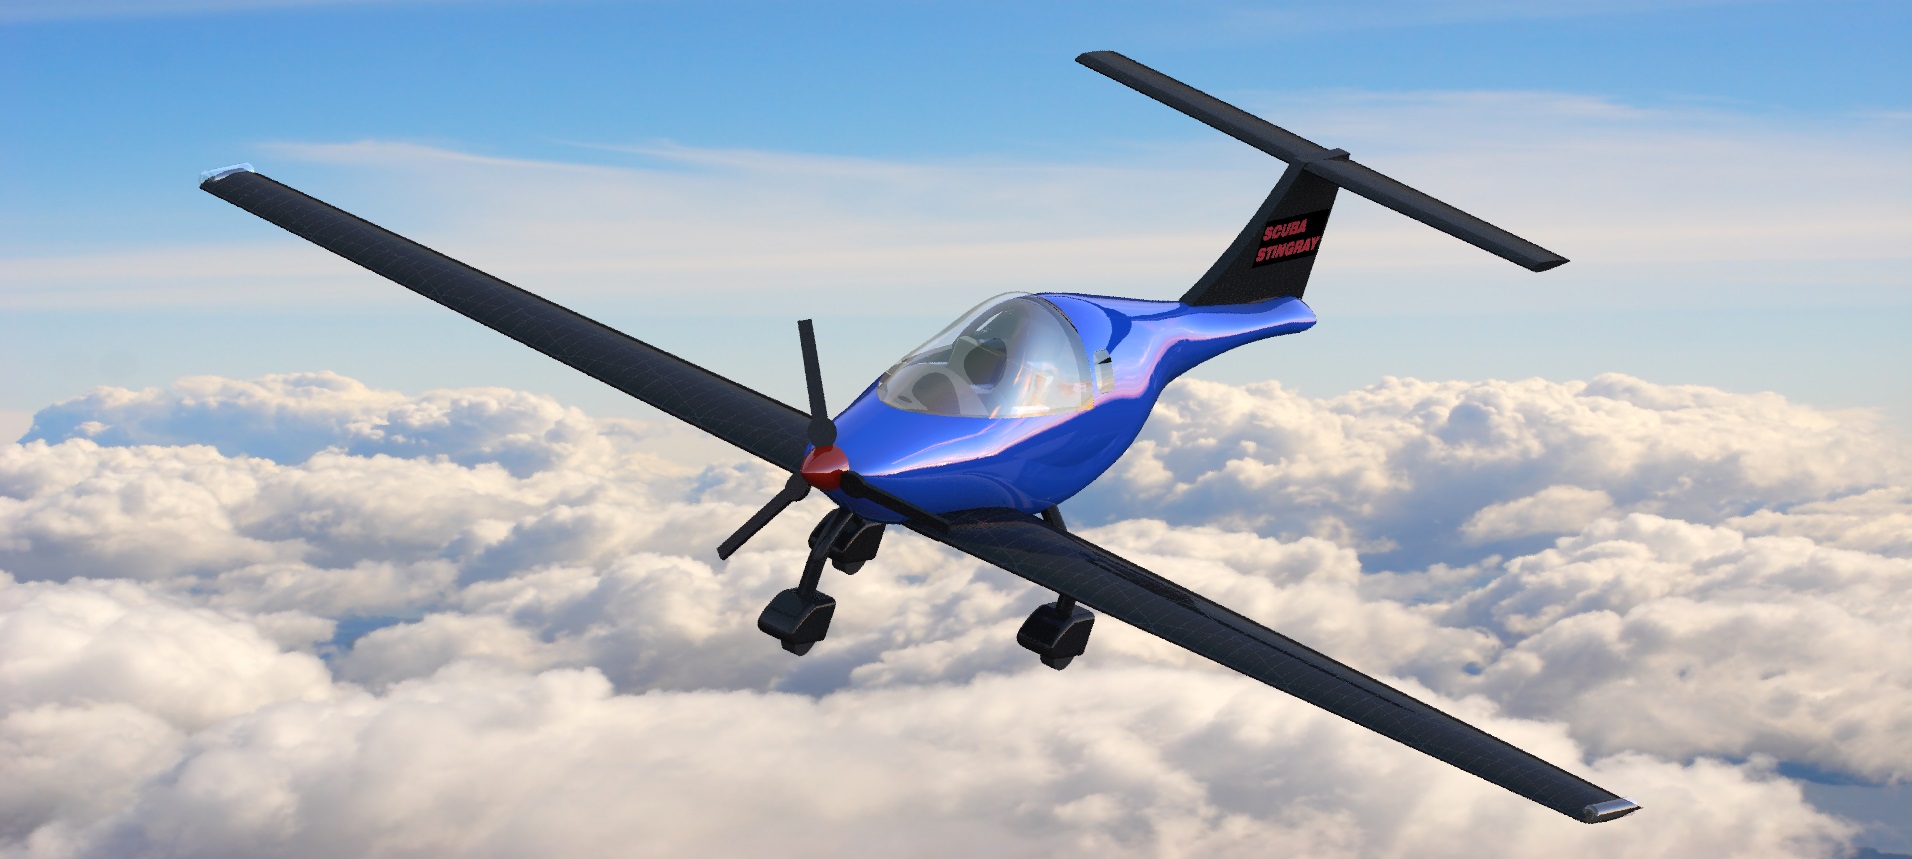 Artist concept of the SCUBA Stingray future aircraft design.